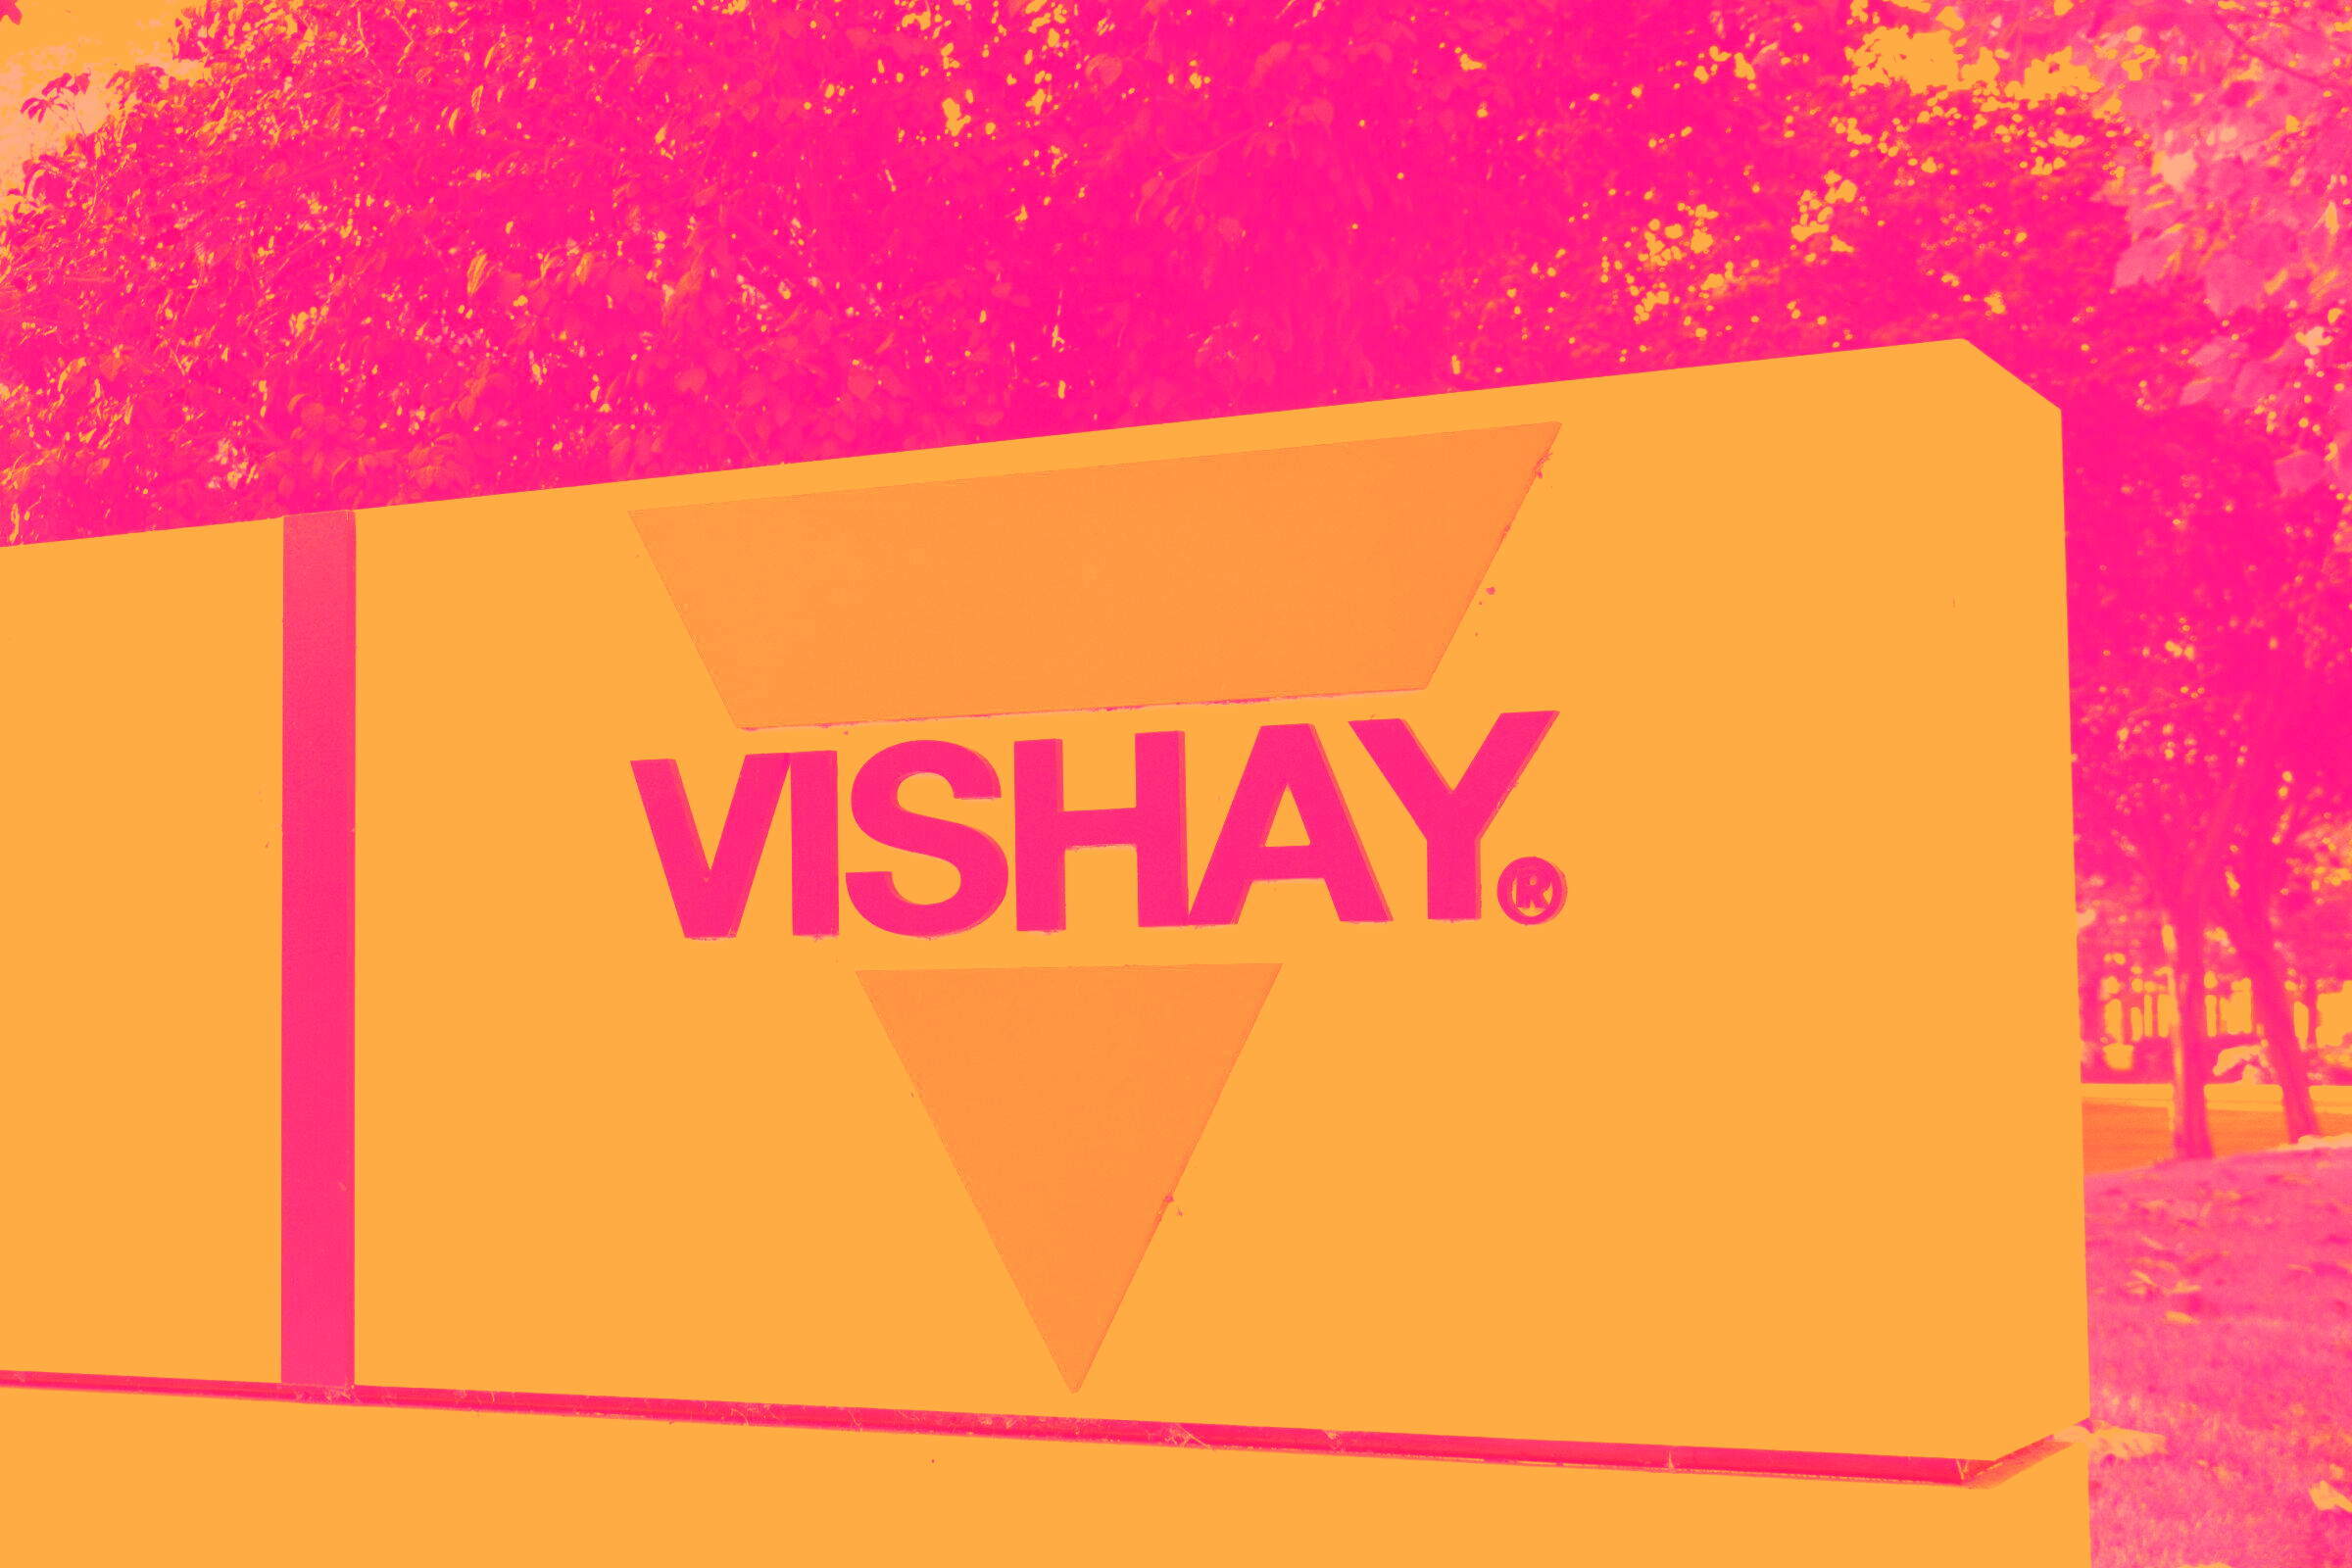 Vishay intertechnology cover image 8ea880ccb25d